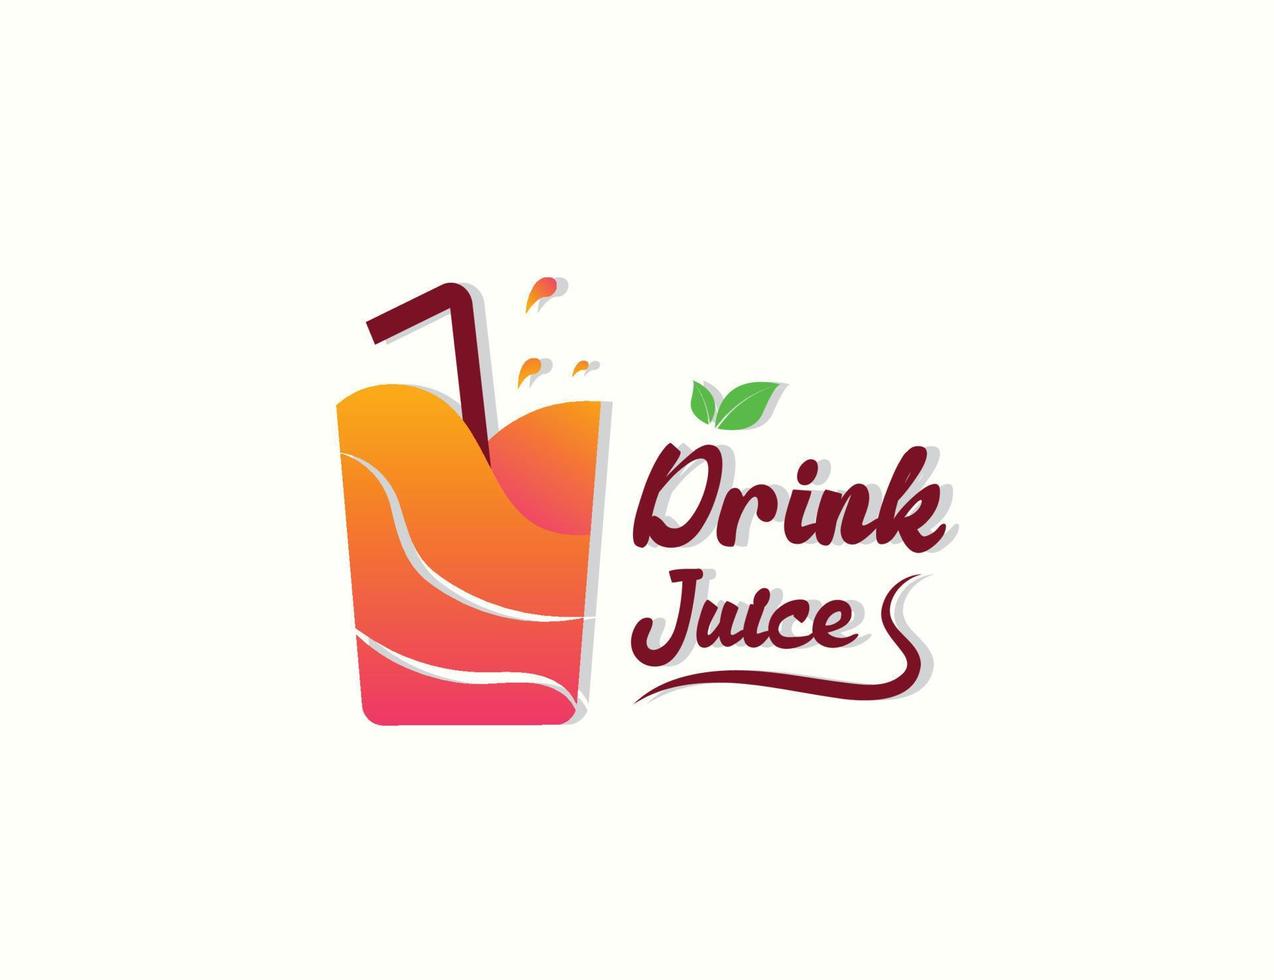 färsk juice logotyp design vektor